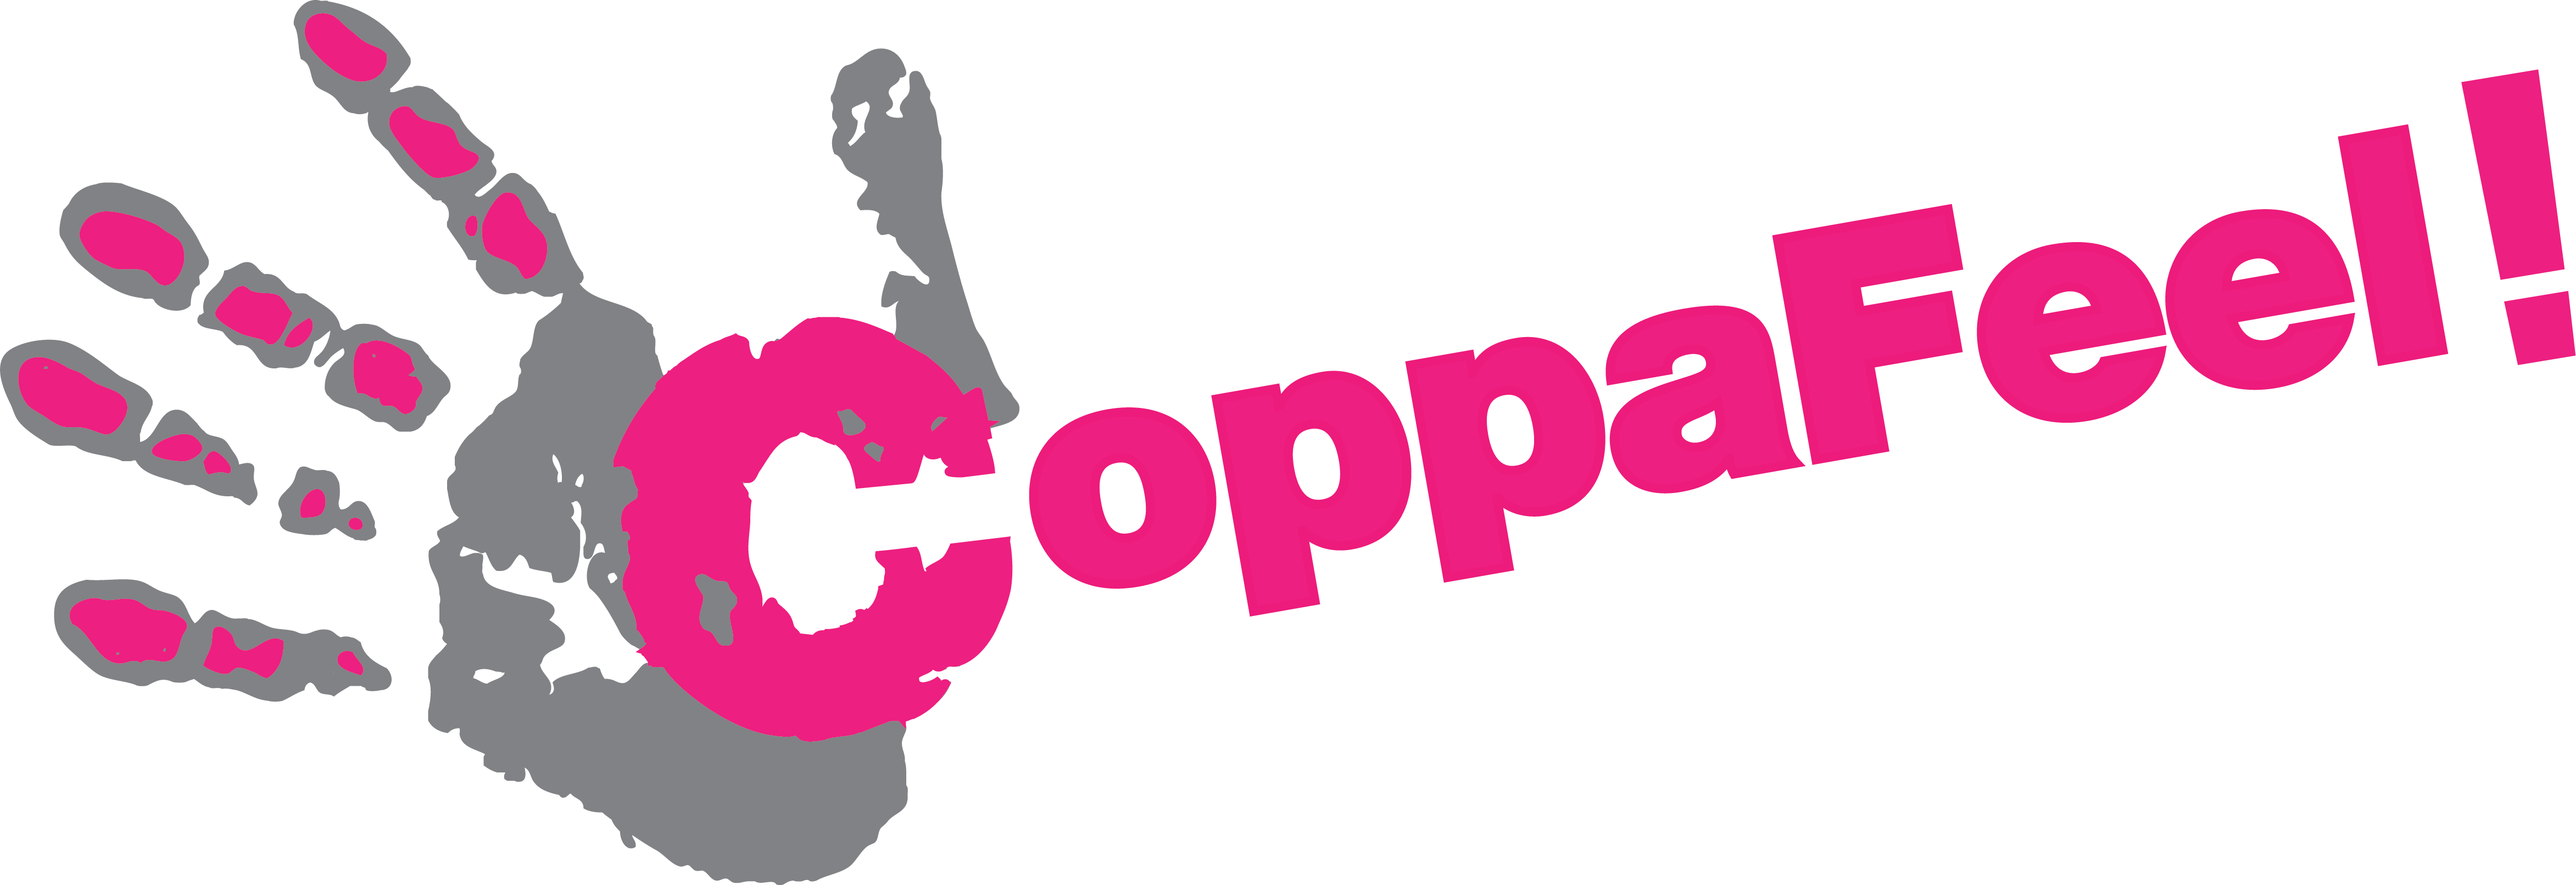 logo for CoppaFeel!